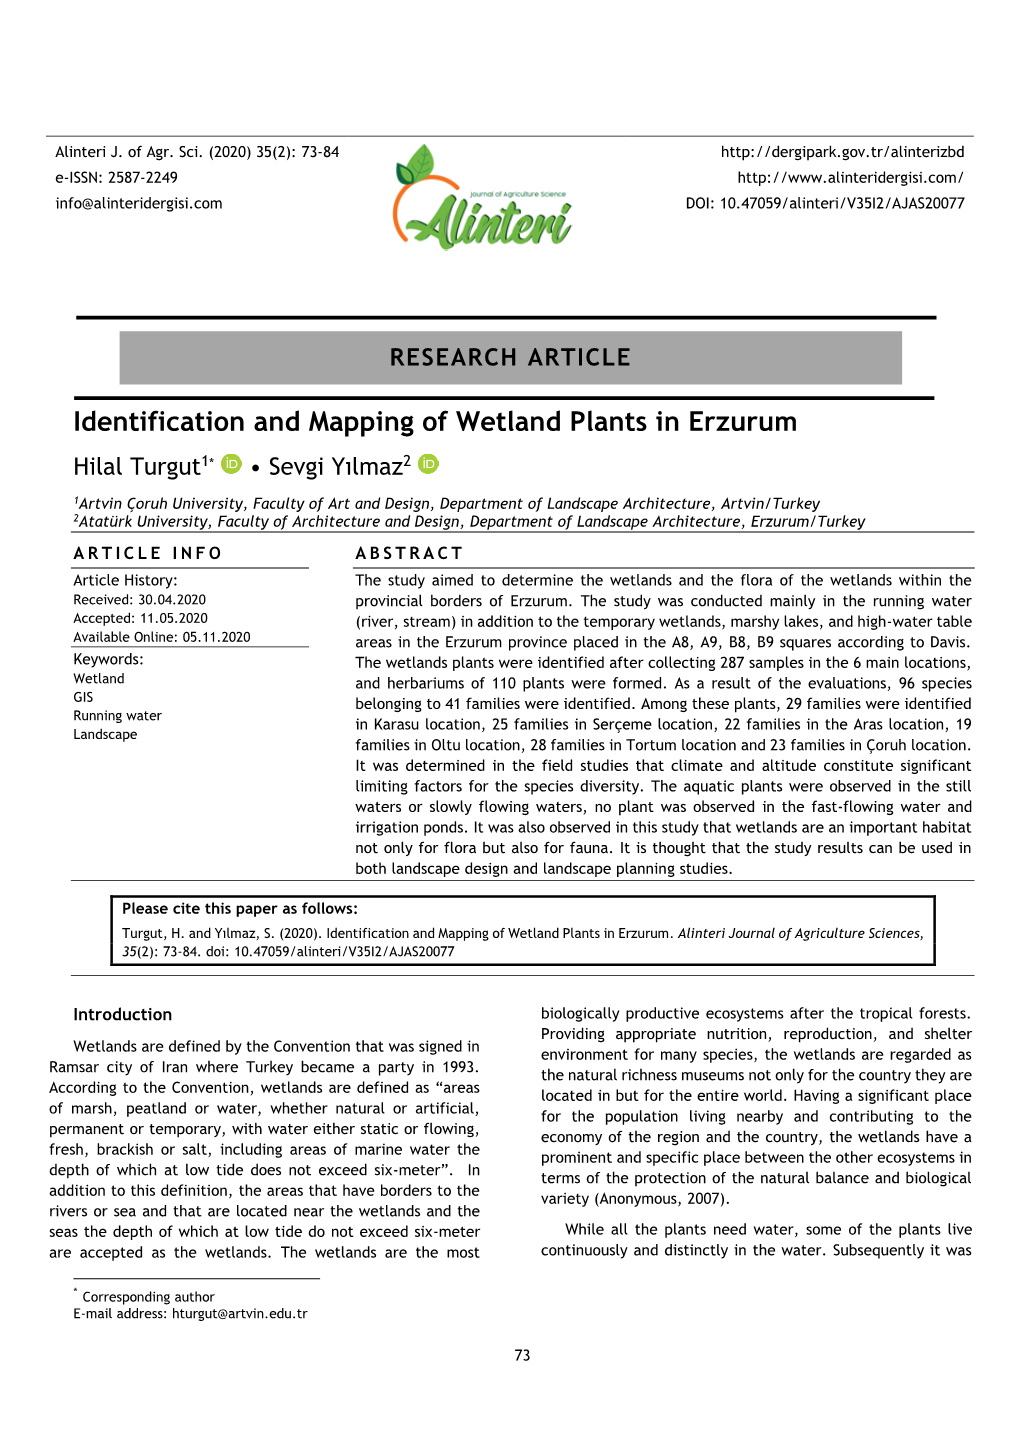 Identification and Mapping of Wetland Plants in Erzurum Hilal Turgut1* • Sevgi Yılmaz2